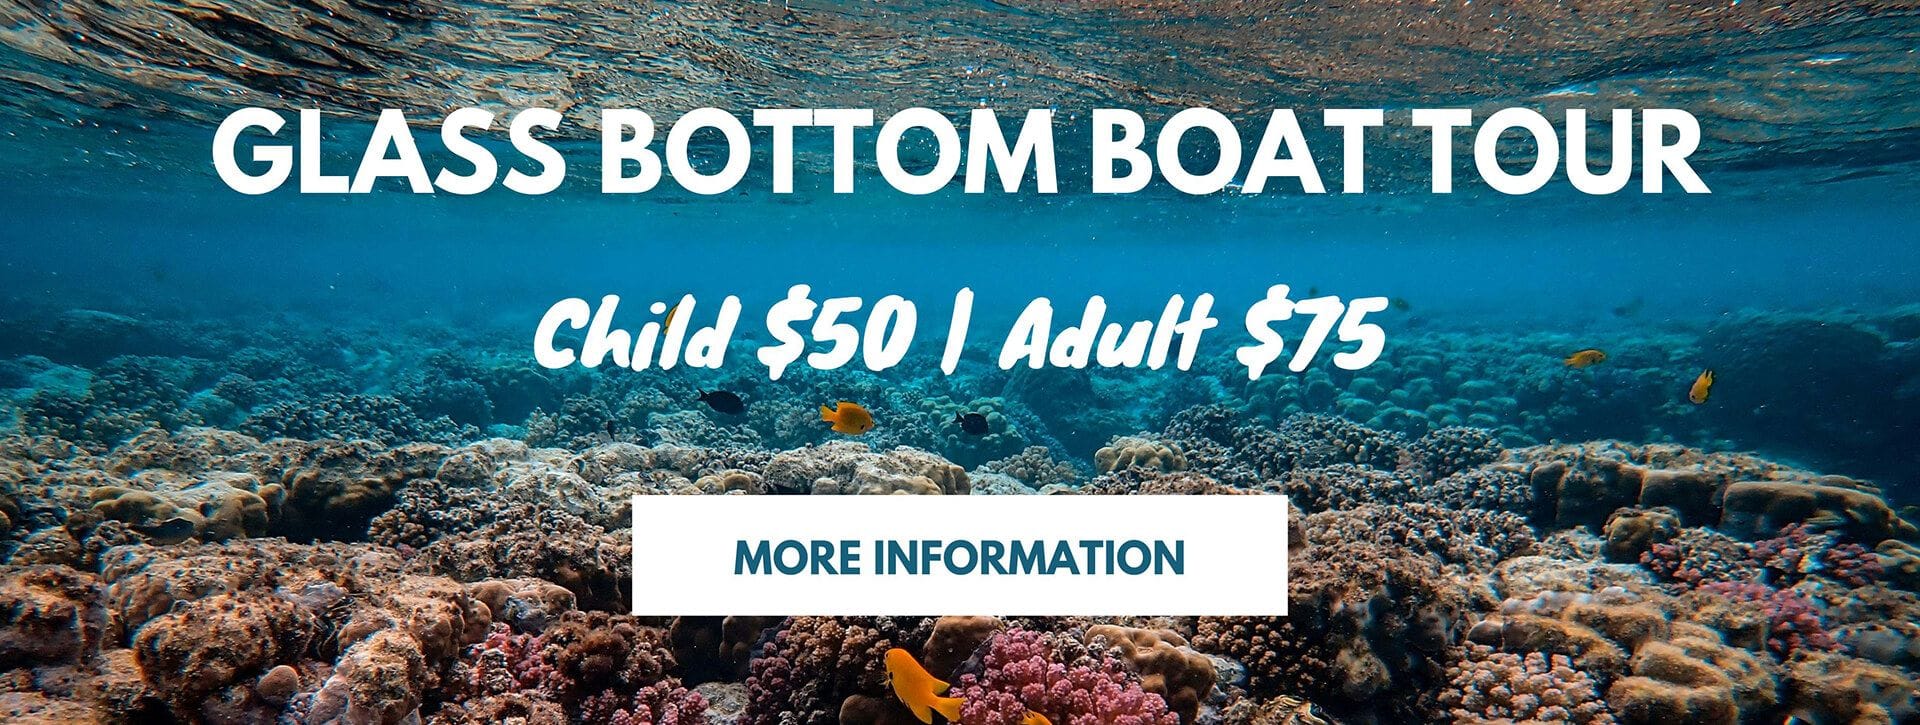 Glass Bottom Boat Tour